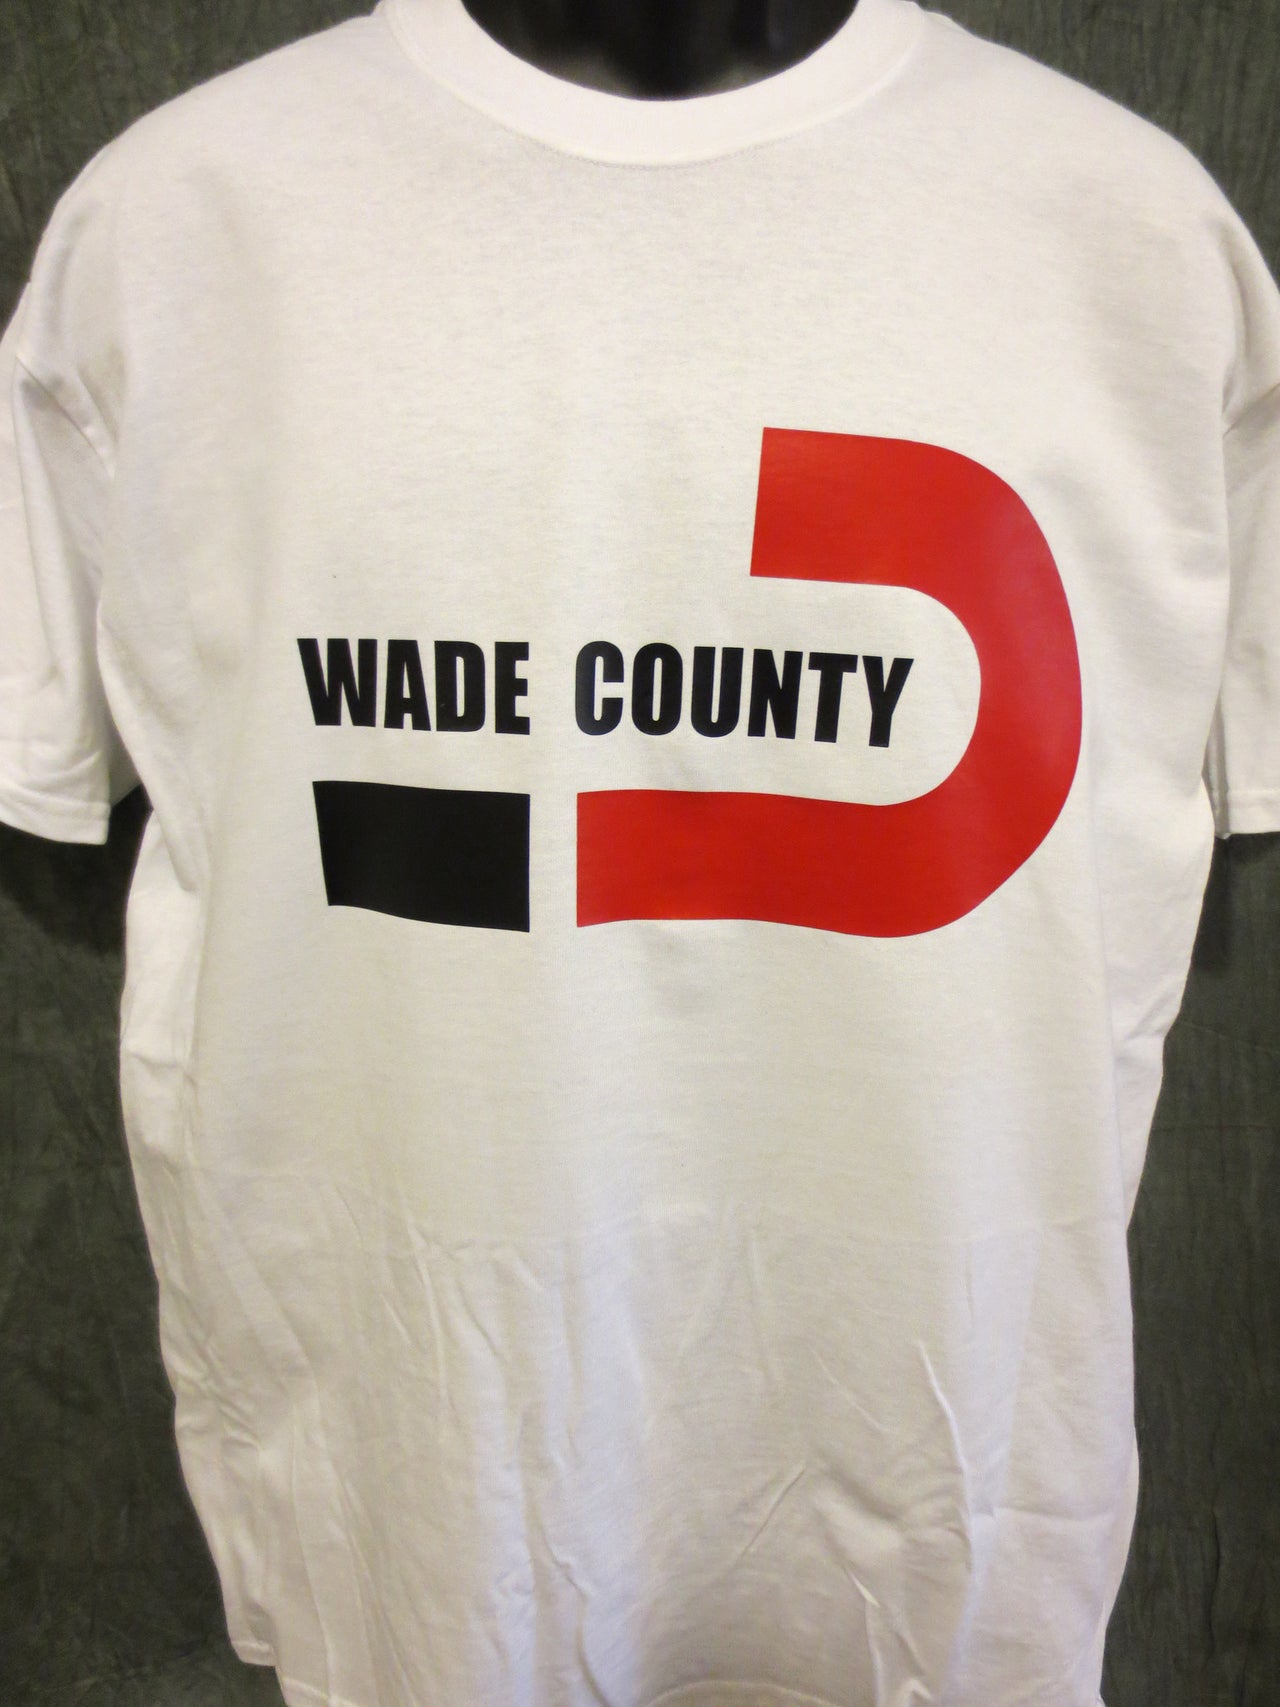 Miami Heat "Wade County" Dwyane Wade White Tshirt - TshirtNow.net - 4